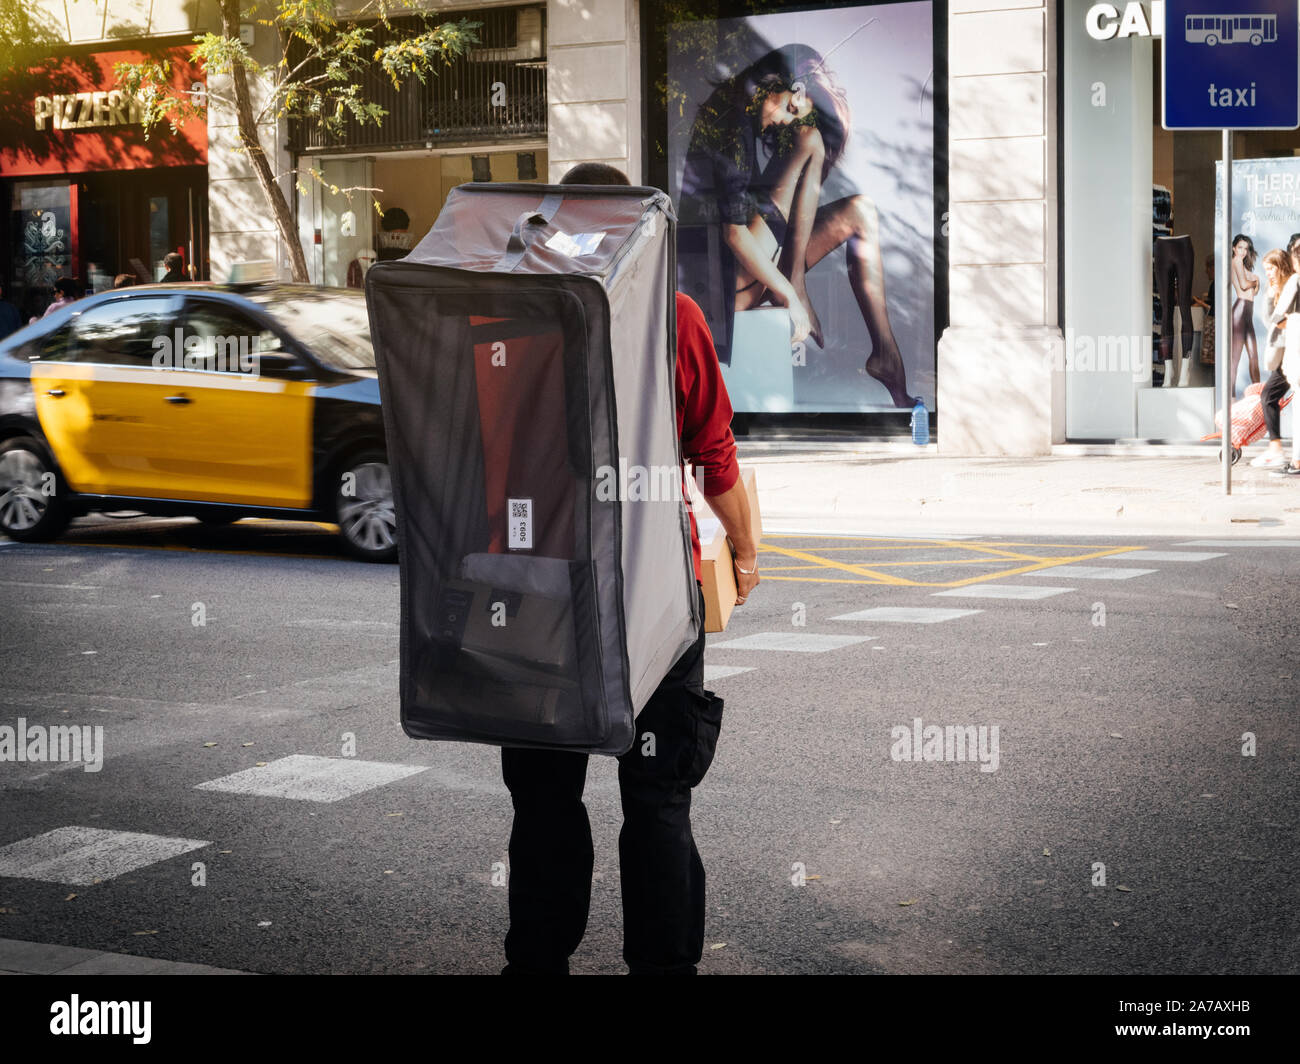 Man Carrying On Back Large Fotos e Imágenes de stock - Alamy